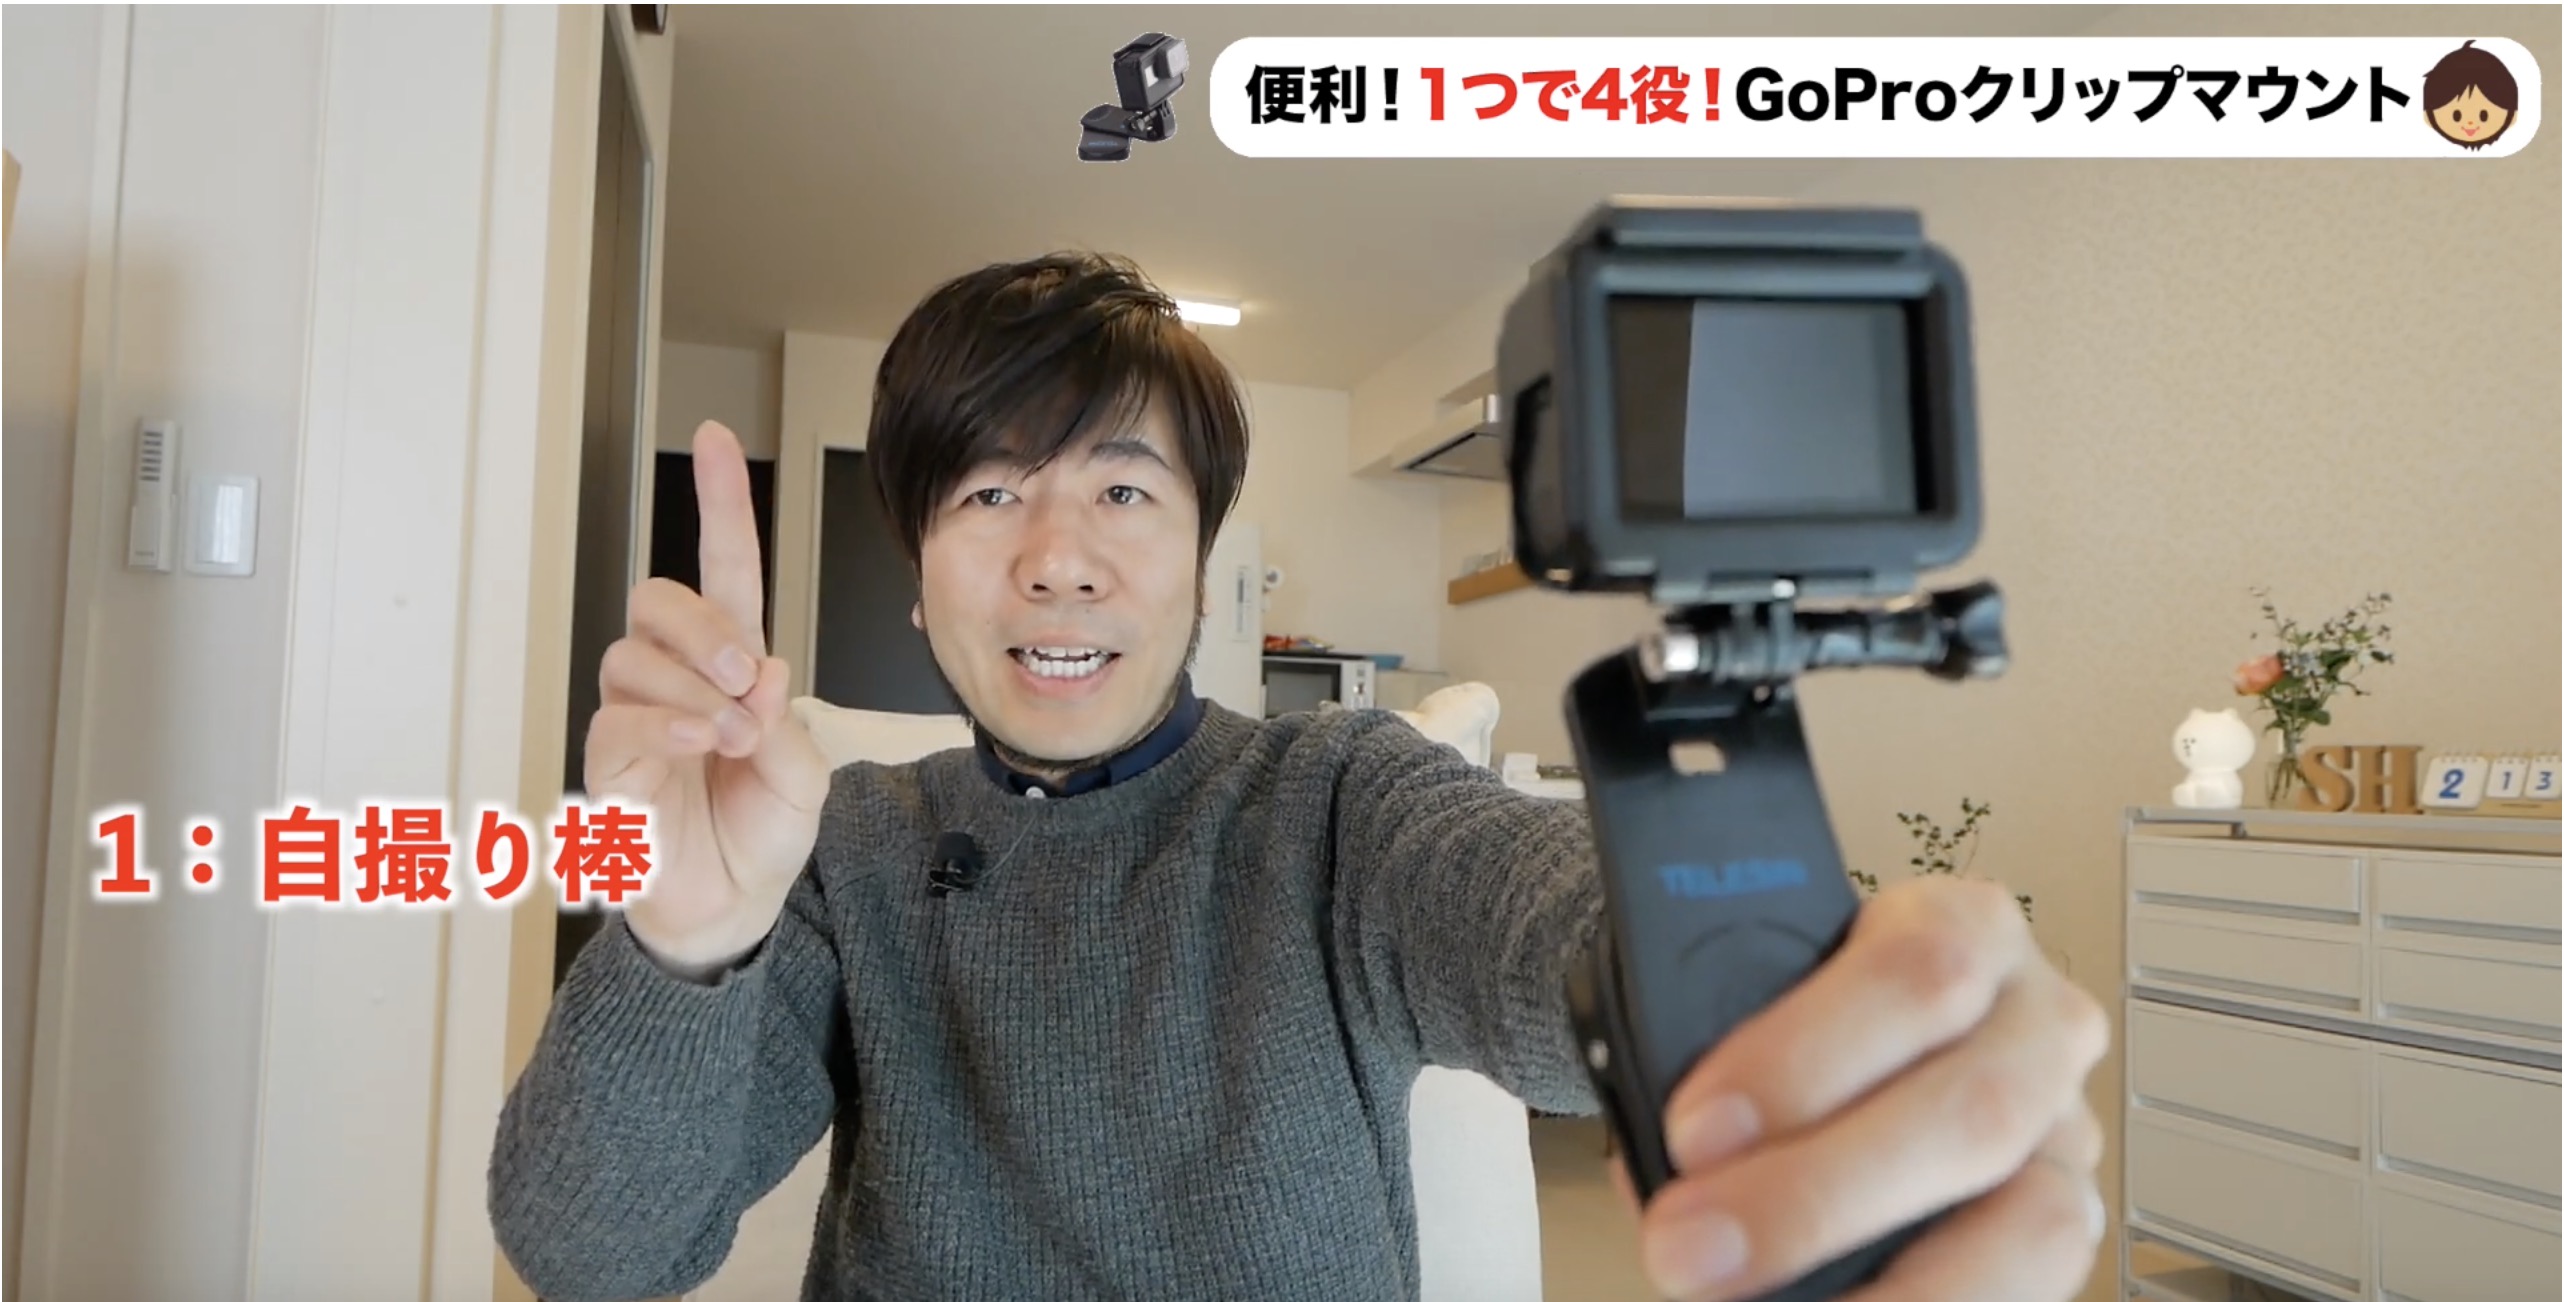 GoPro HERO7 Black クリップマウント